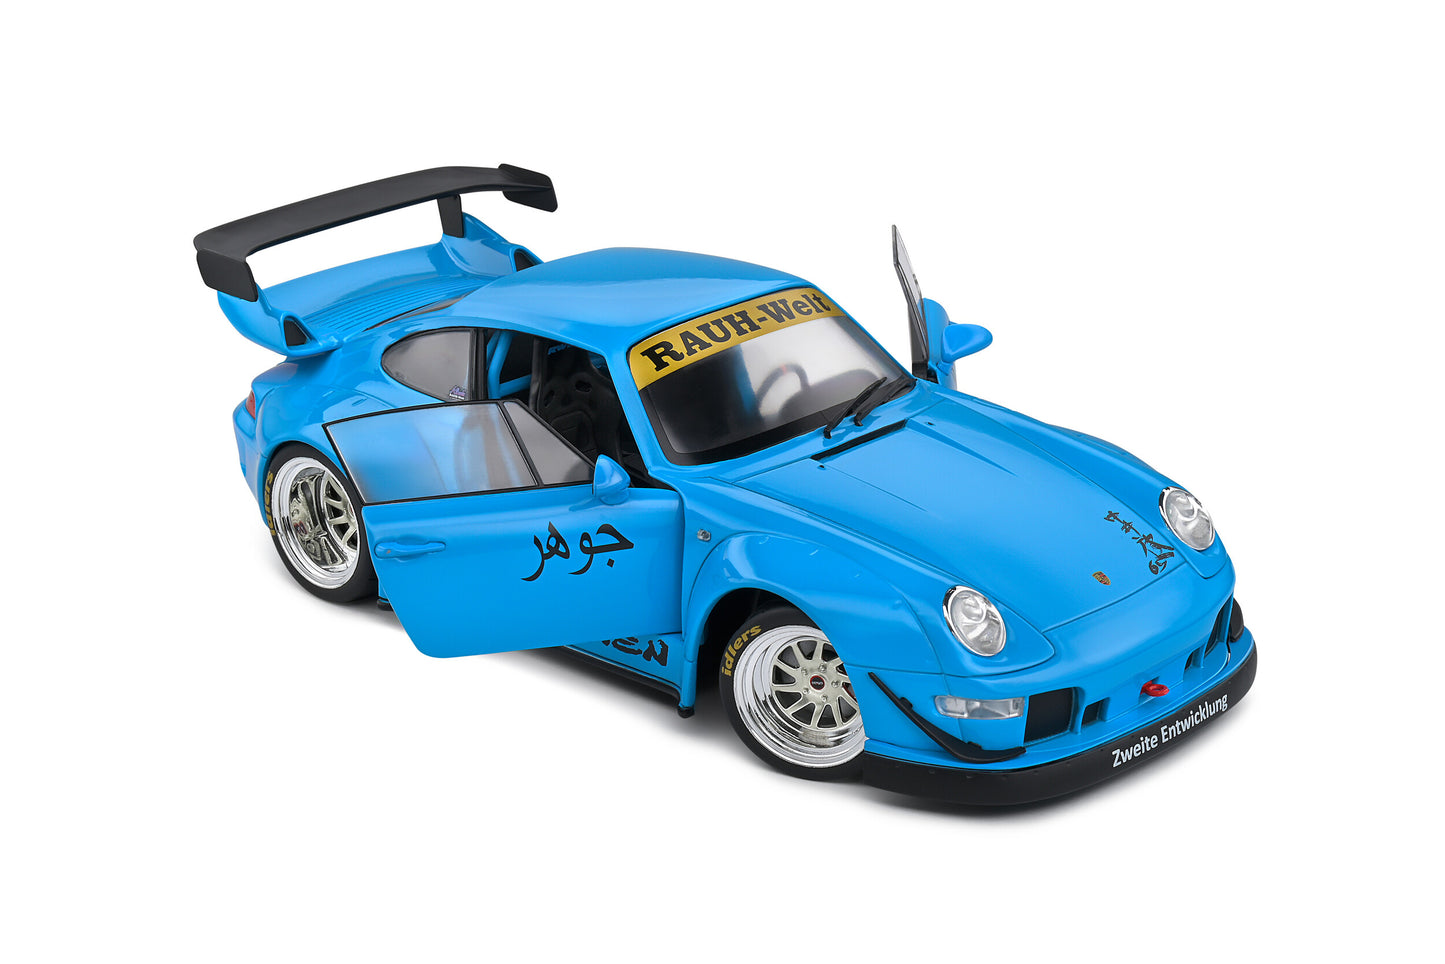 Solido 2018 Porsche 993 RWB Bodykit Shingen Blue 1:18